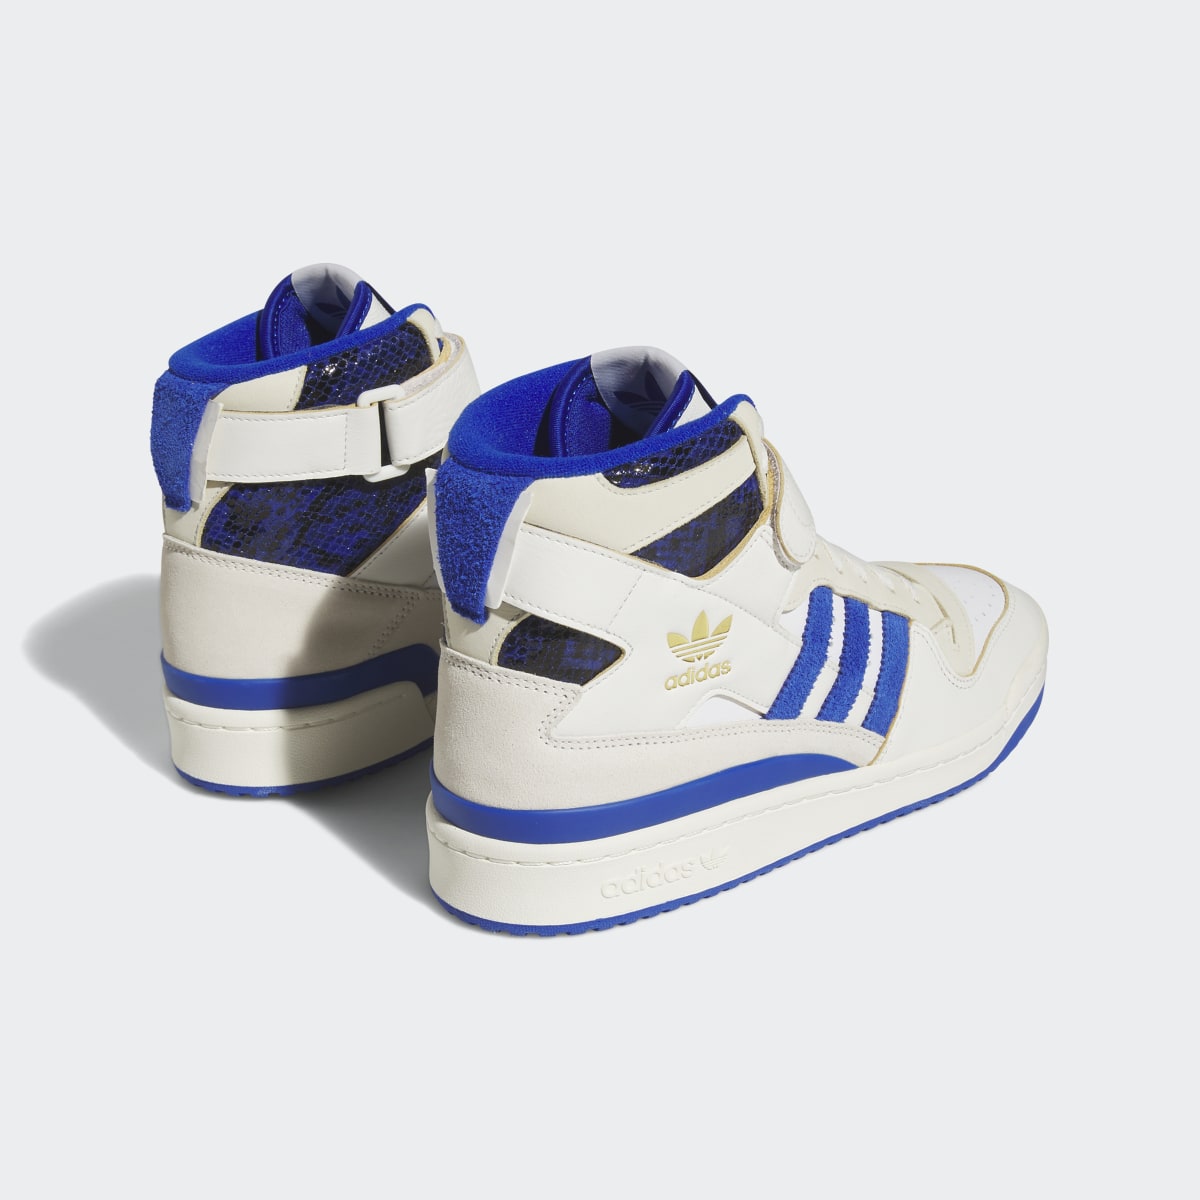 Adidas Forum 84 Hi Shoes. 6